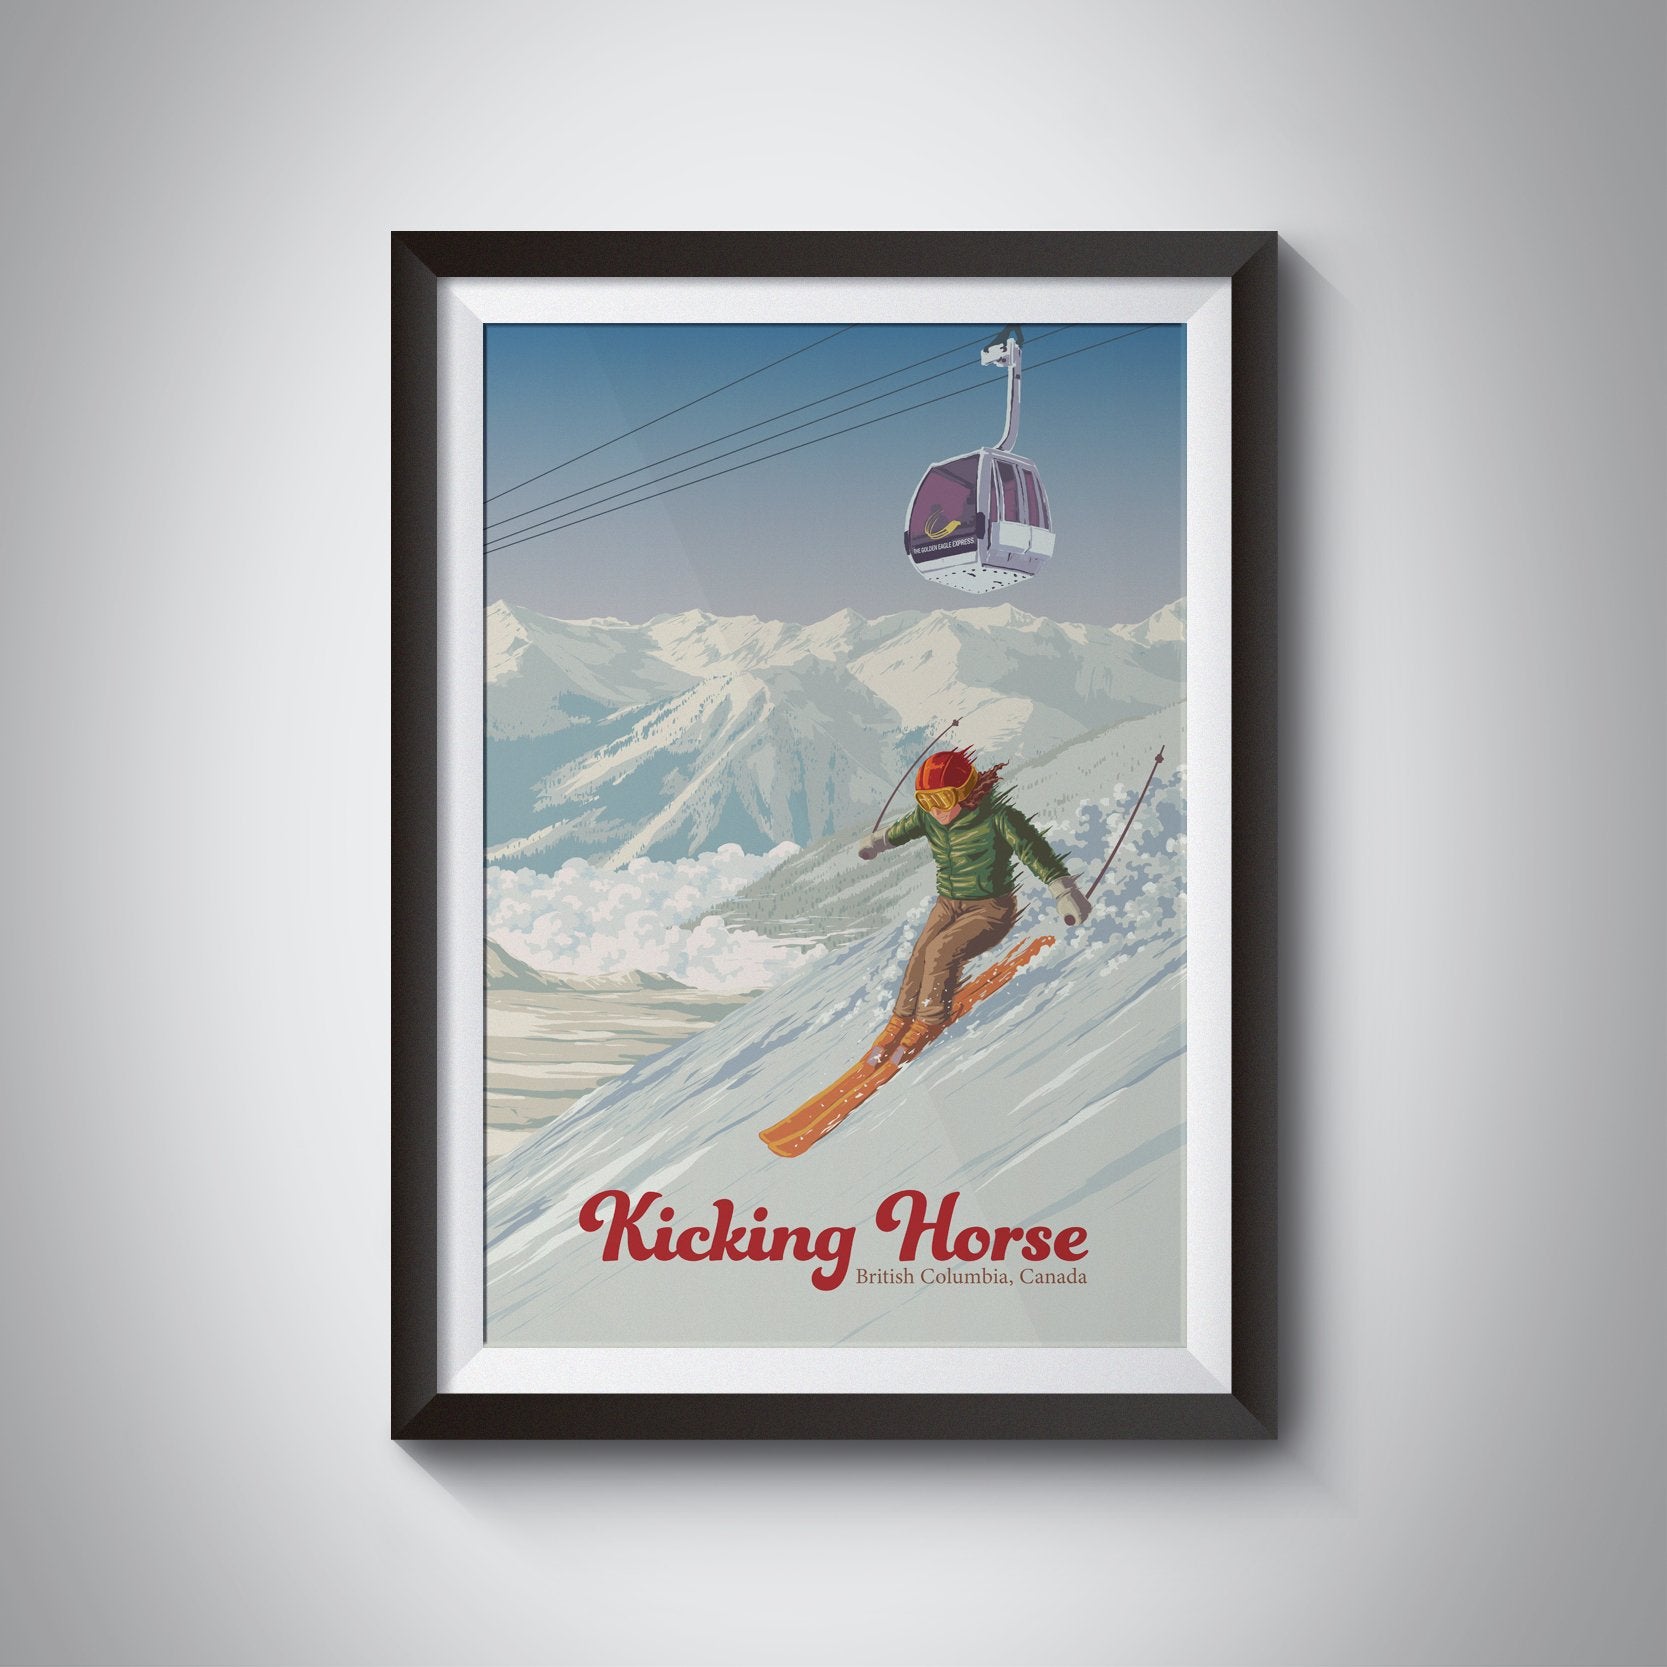 Kicking Horse Golden British Columbia Canada Ski Resort Travel Poster